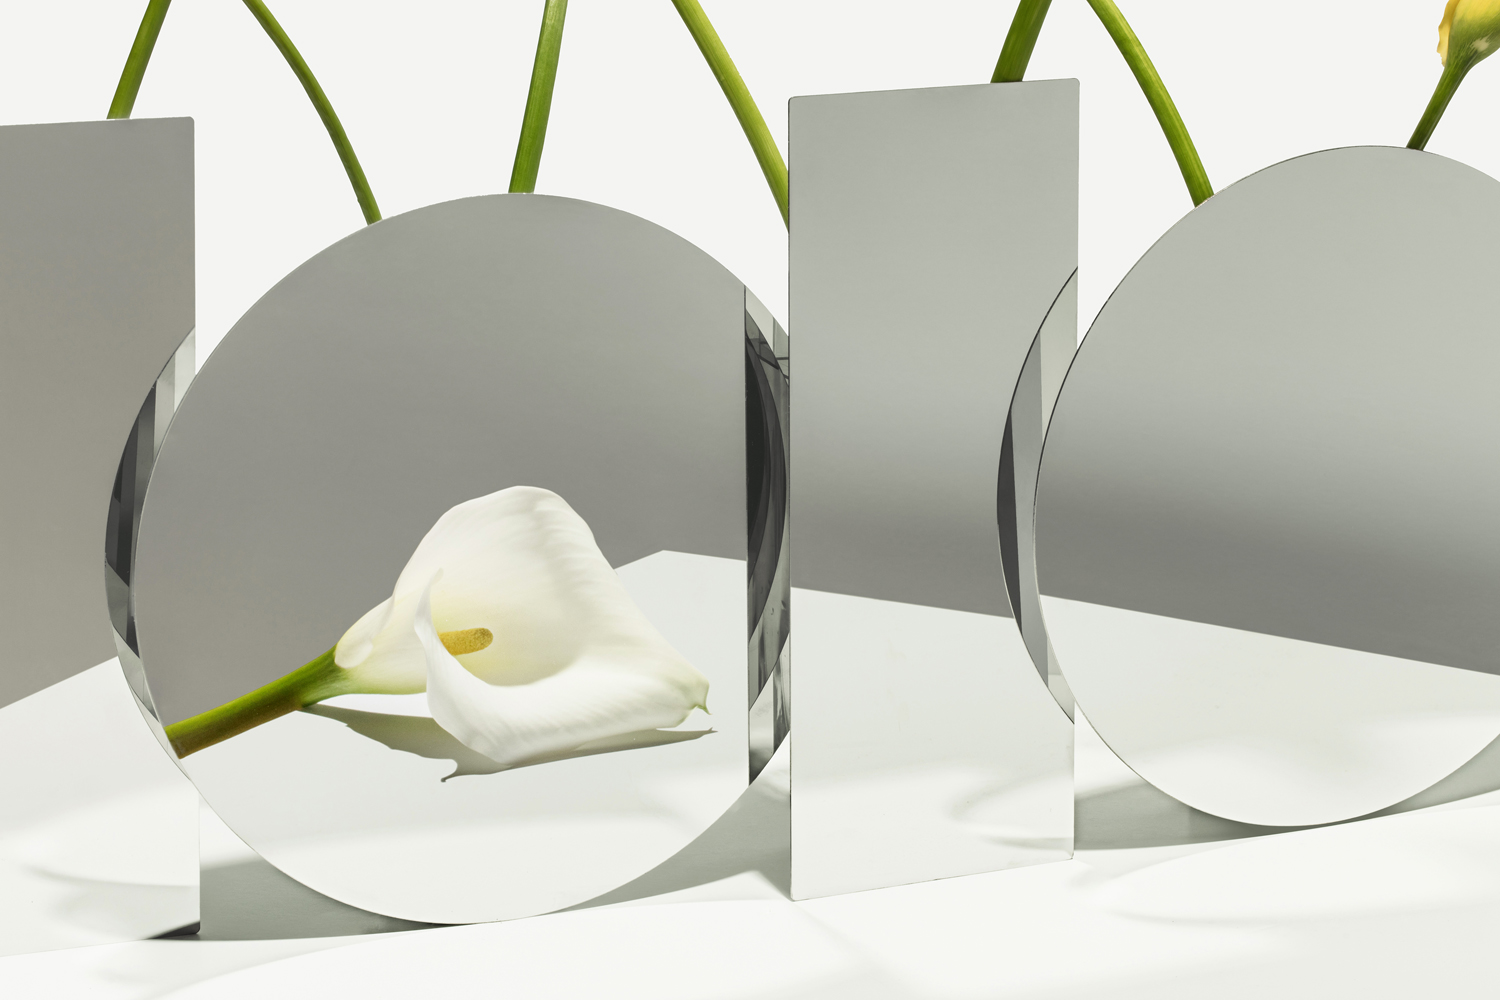 Minimalist Vase "A Mirror Face" by Seoul-based studio ADAO